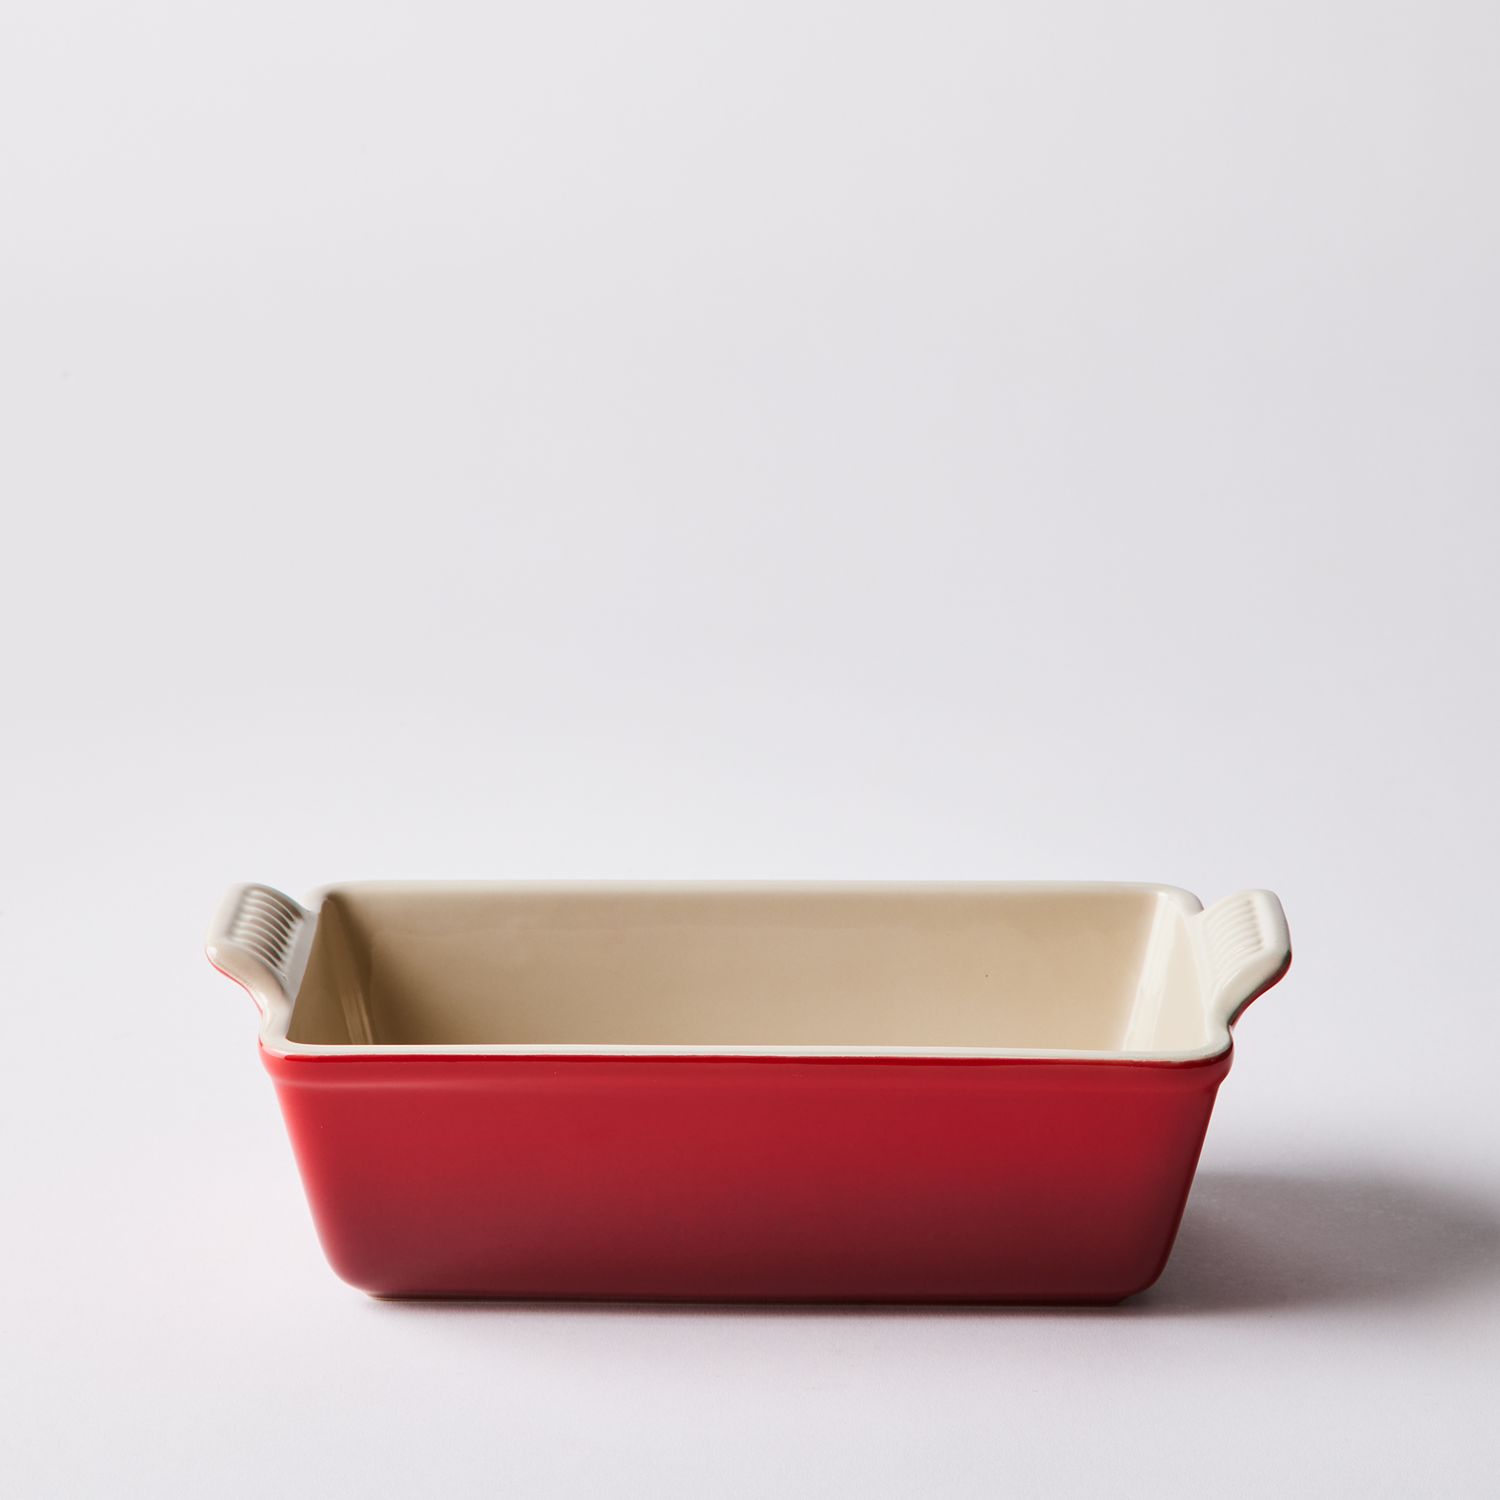 Le Creuset ® Cerise Red Ceramic Loaf Pan